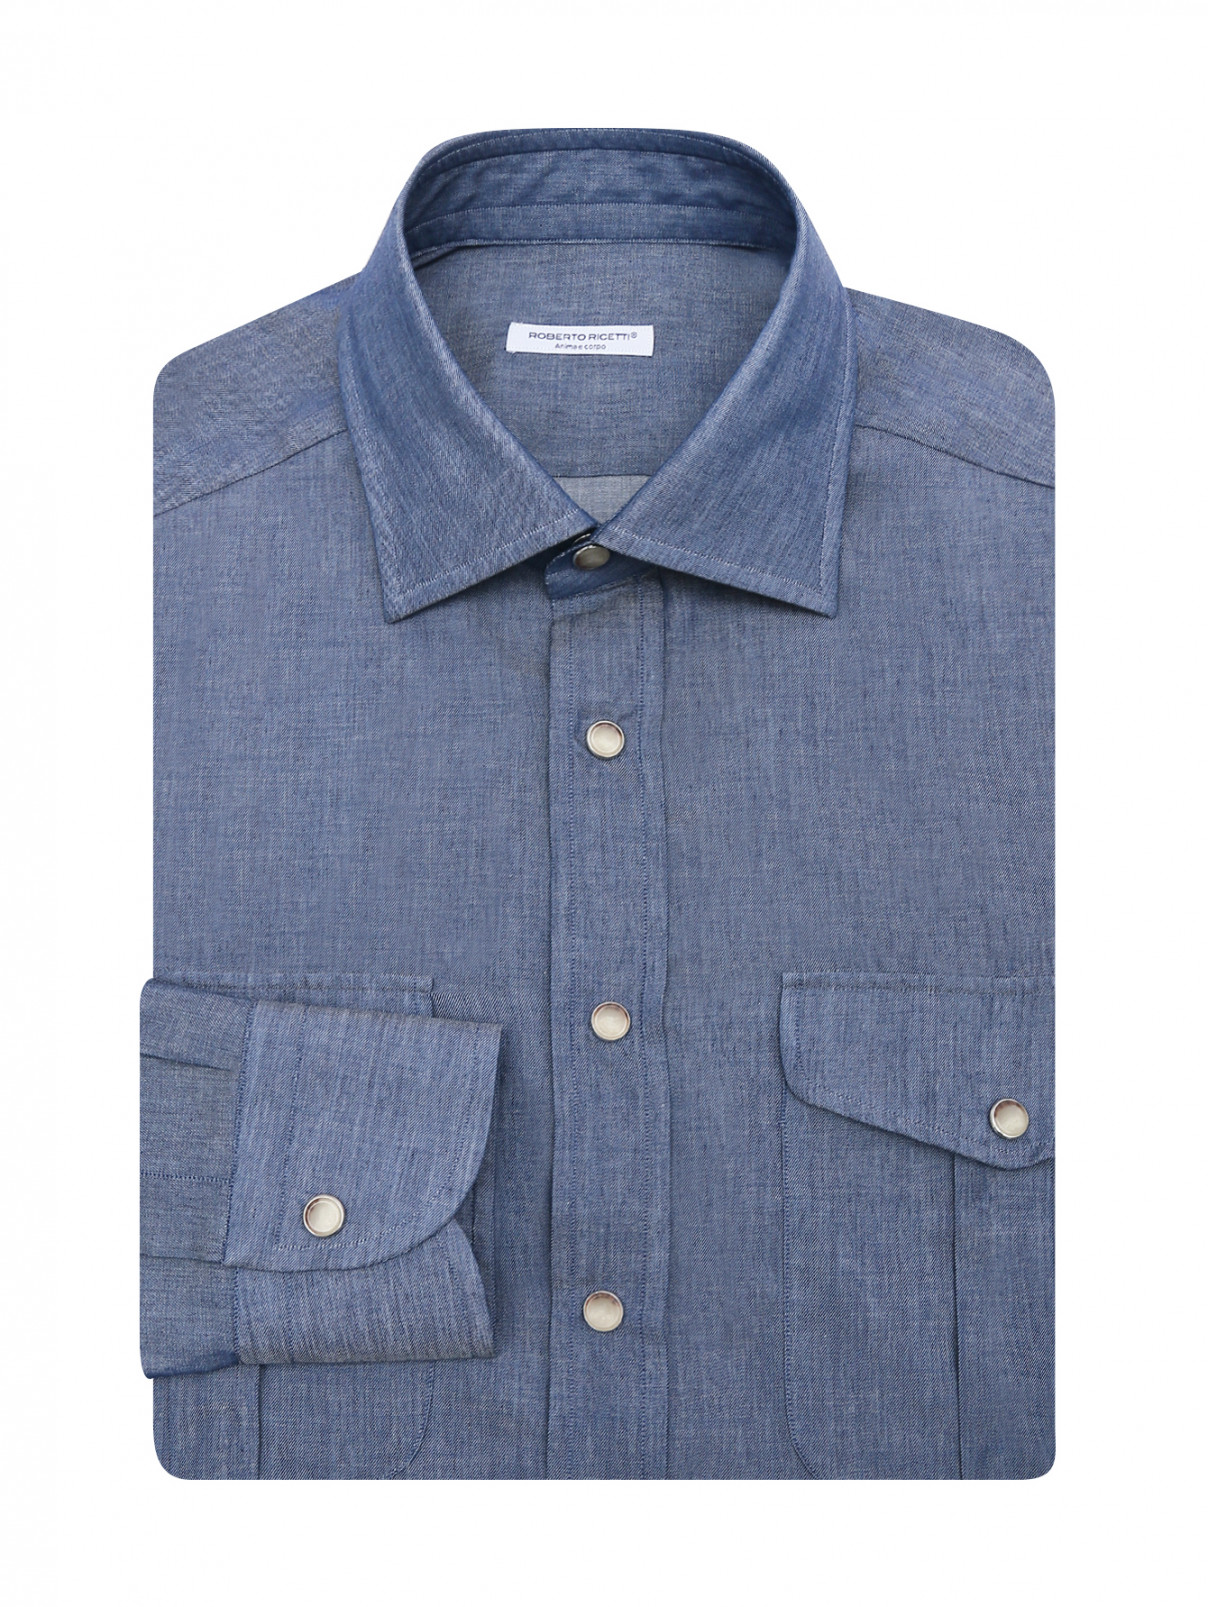 Рубашка из хлопка с накладными карманами Roberto Ricetti  –  Общий вид  – Цвет:  Синий